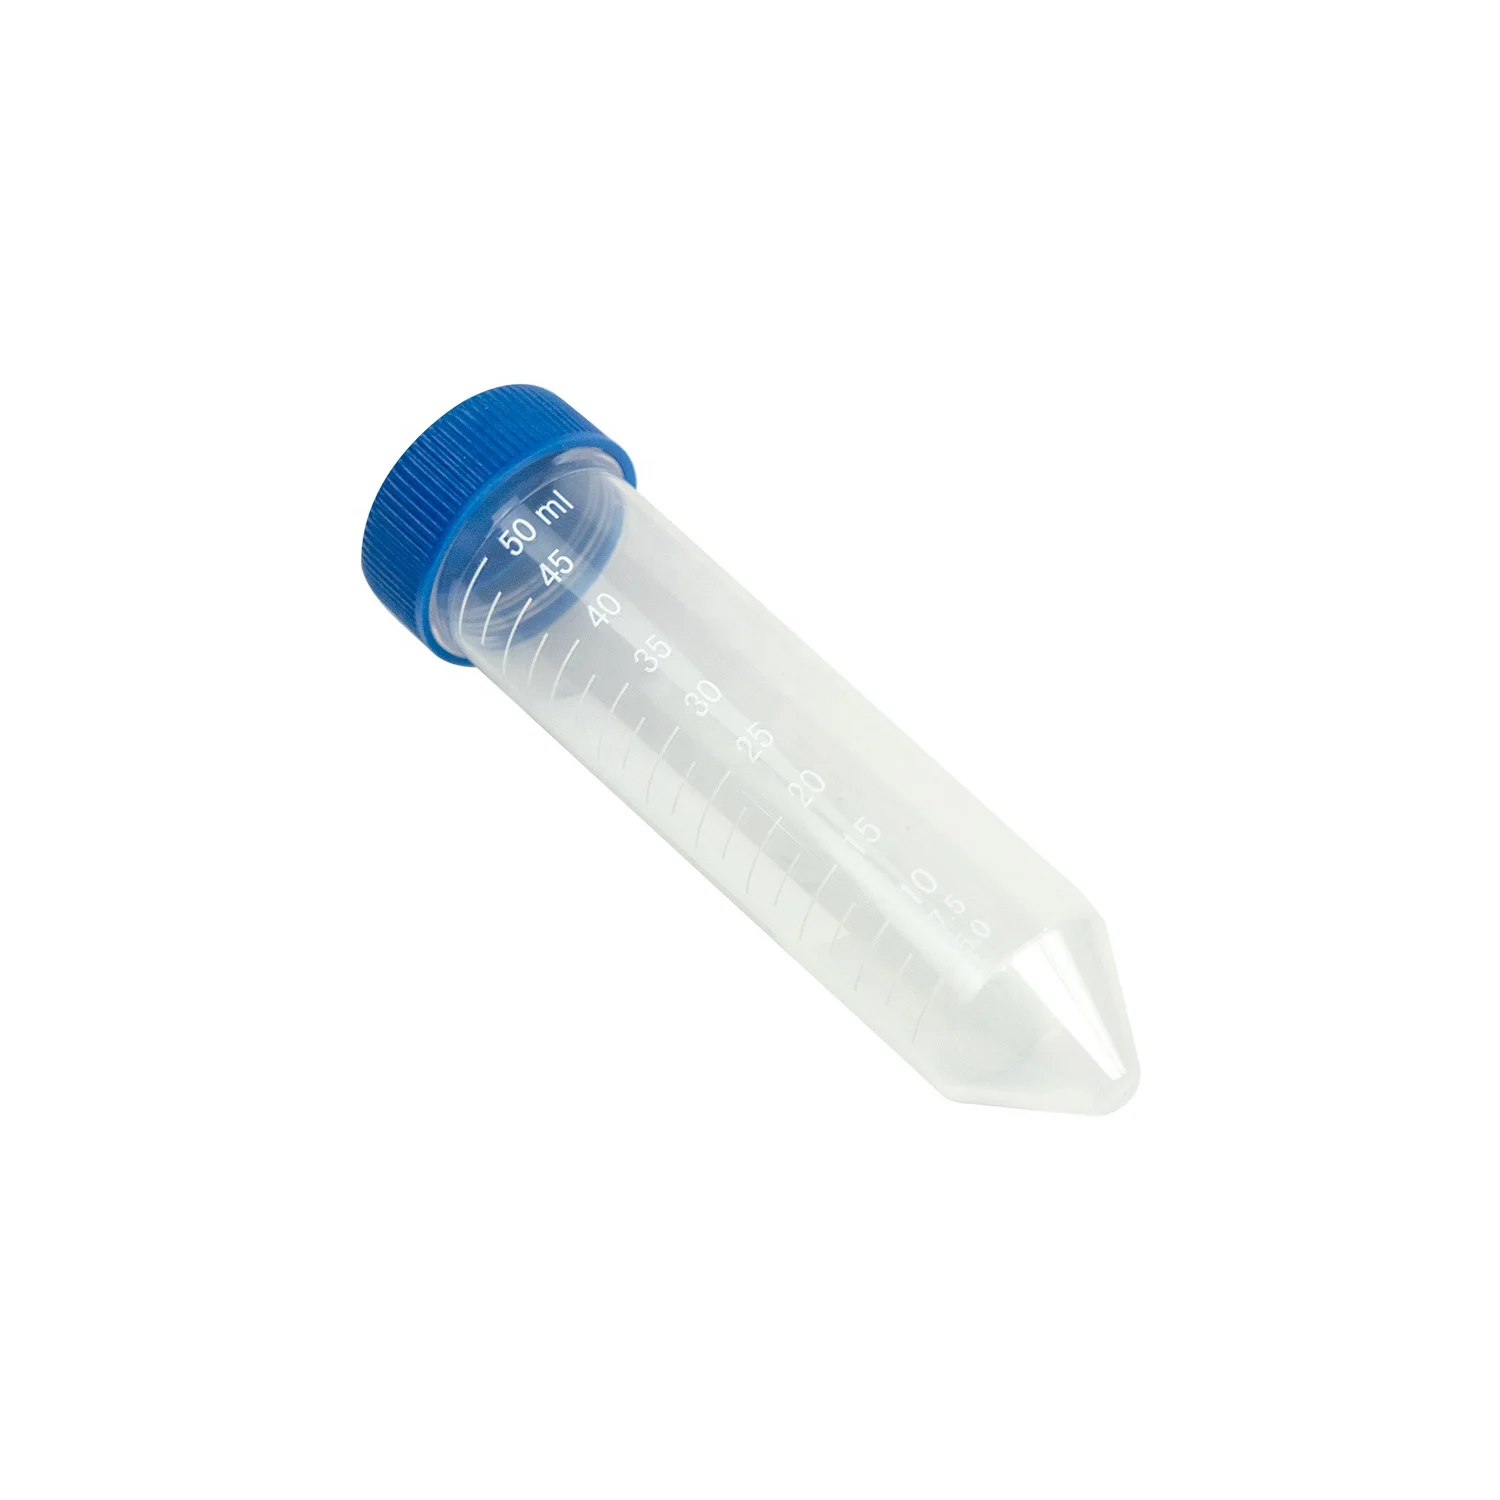 Laboratory Supplies Plastic Blue Screw Cap 50ml Centrifuge Falcon Tubes Conical Micro Centrifuge Tubes